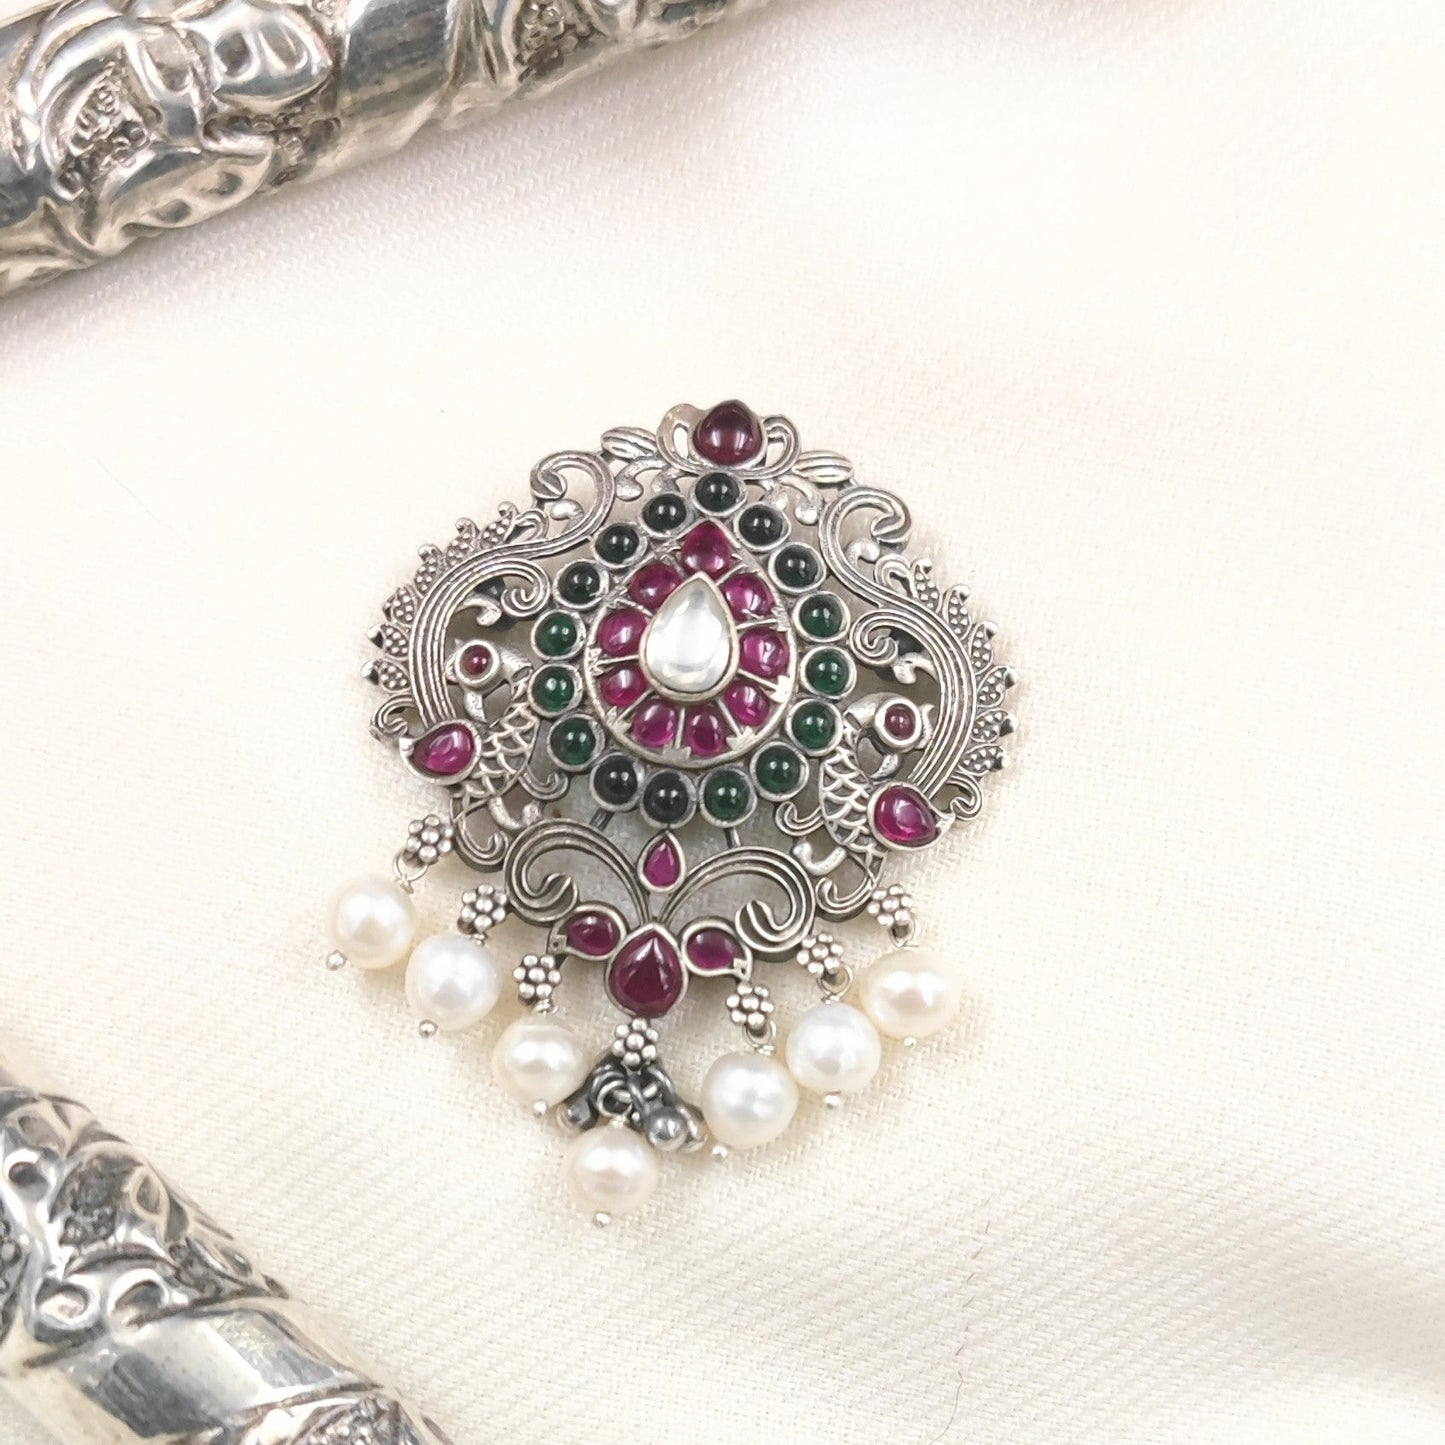 Silver Jewelry Pendant by Jauhri 92.5 Silver - Amrit Vaani Pendant